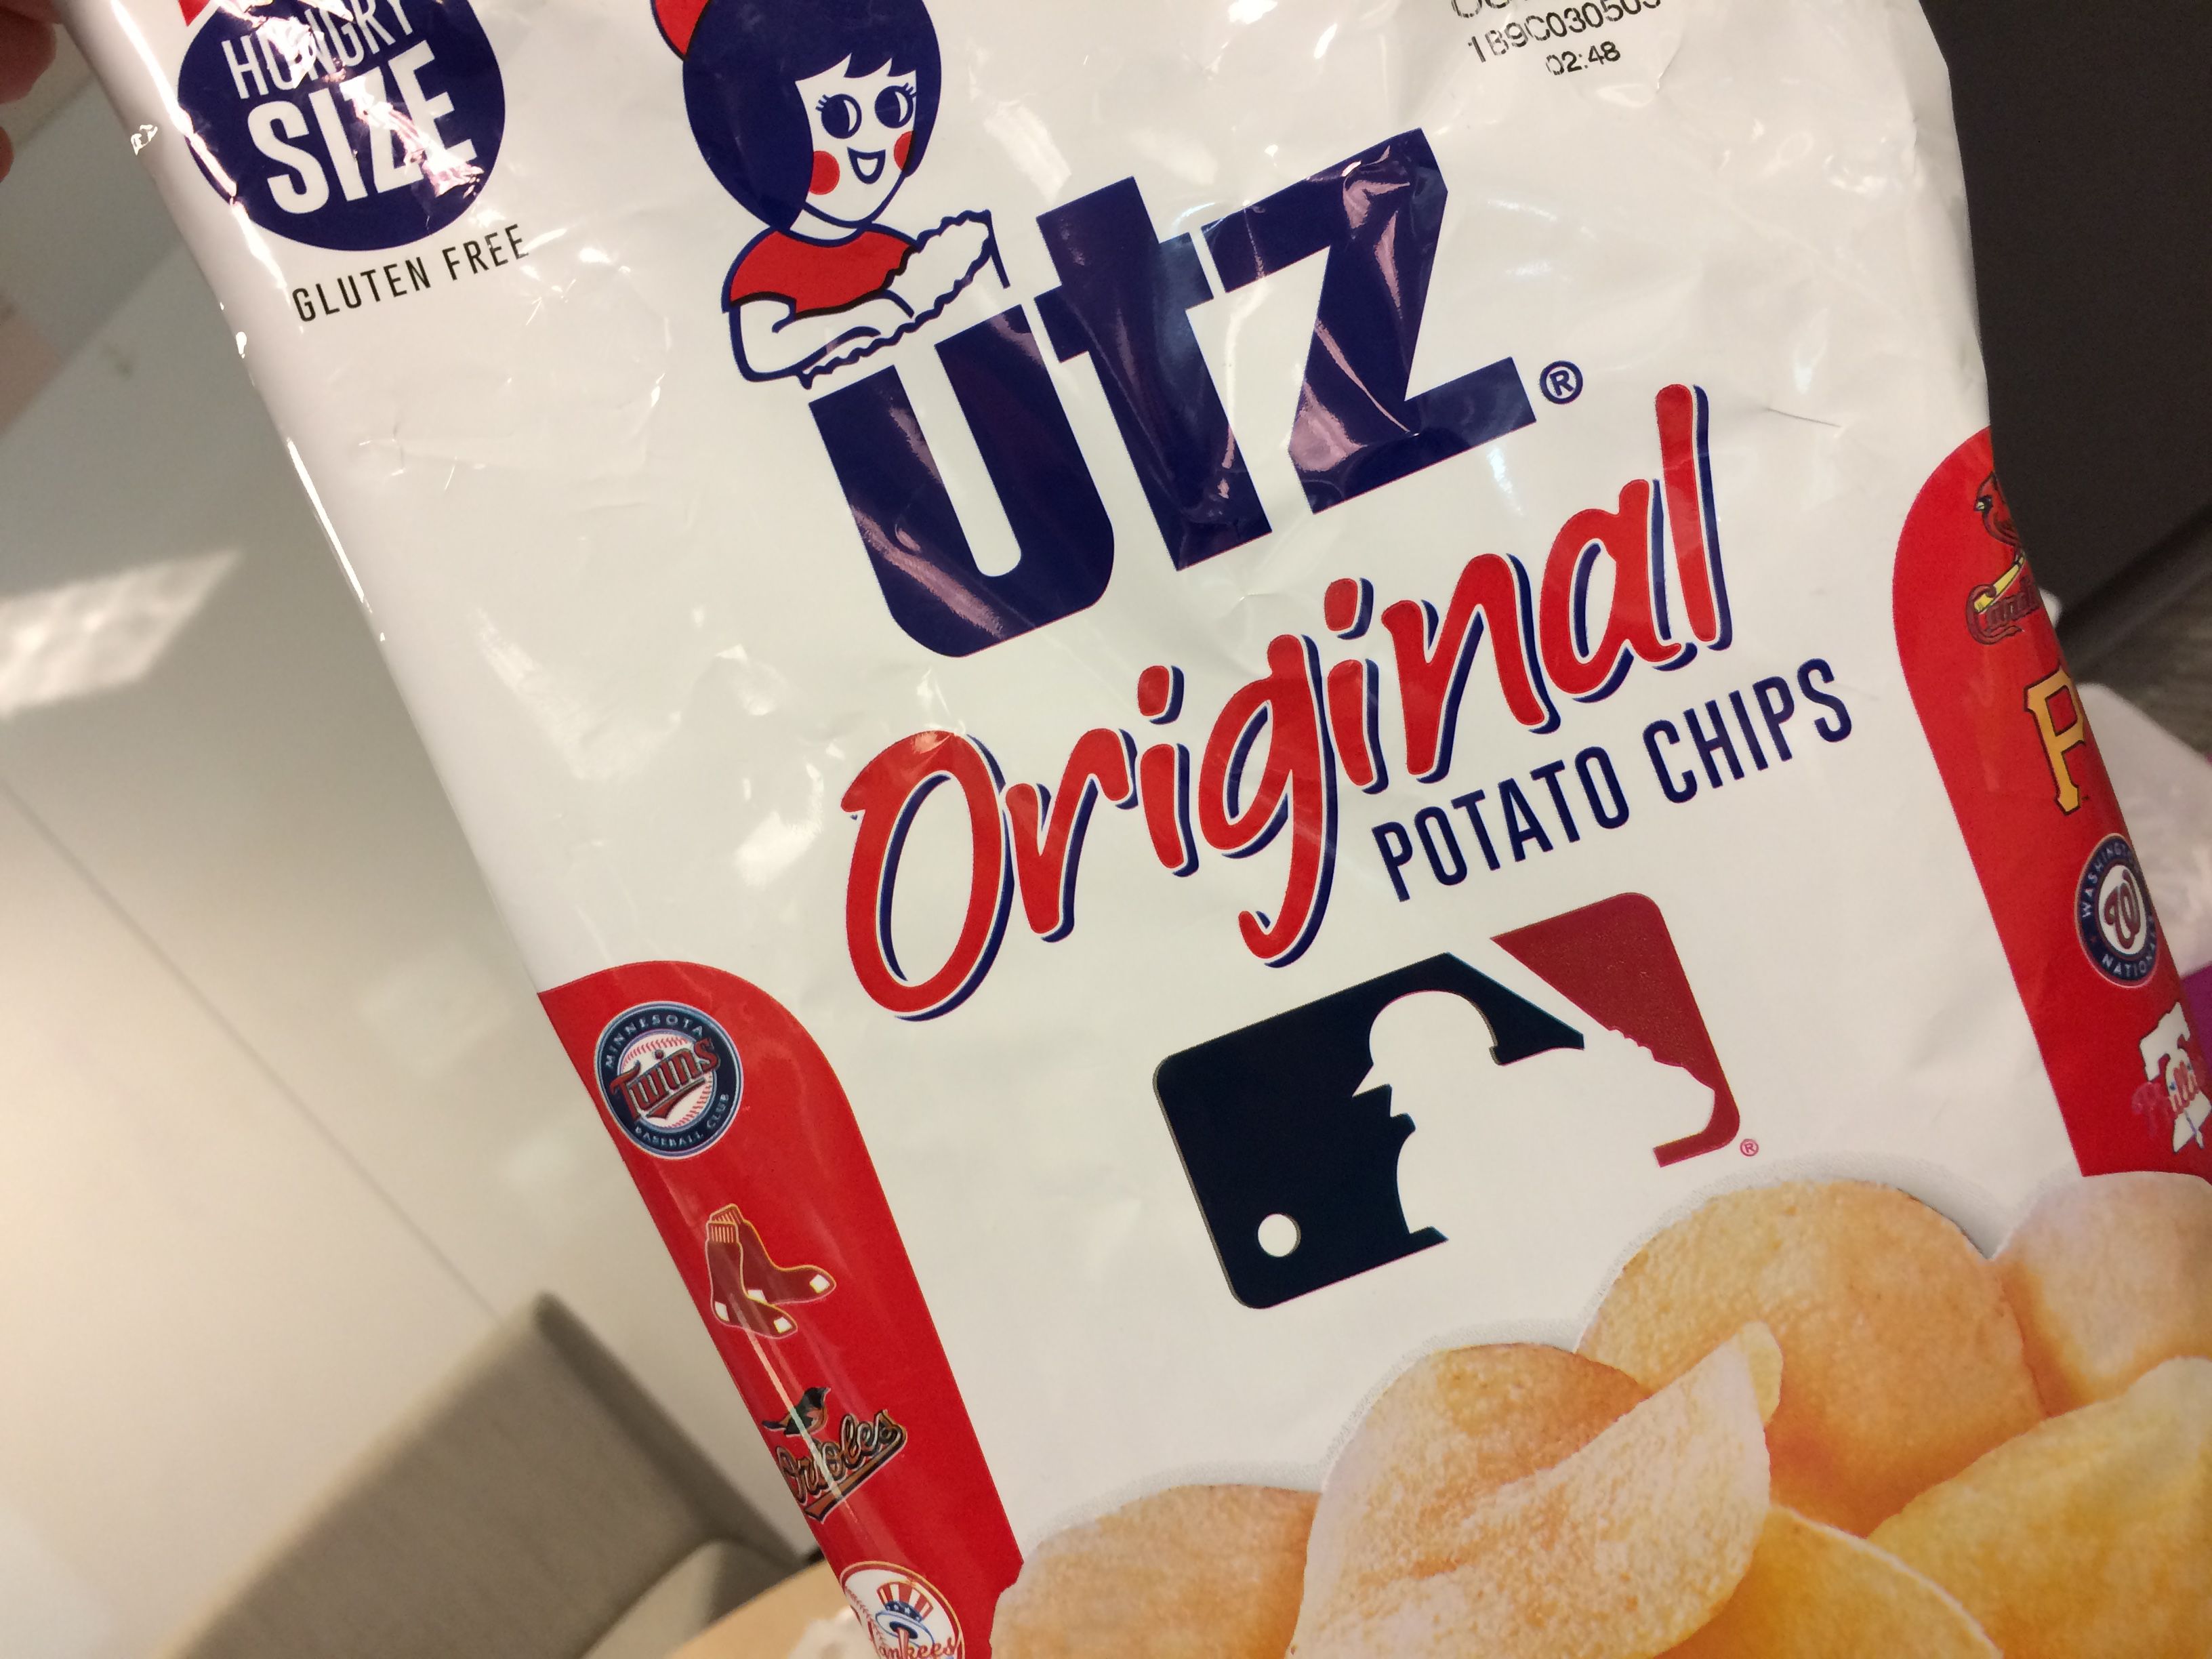 A Definitive Ranking of Popular Potato Chip Brands